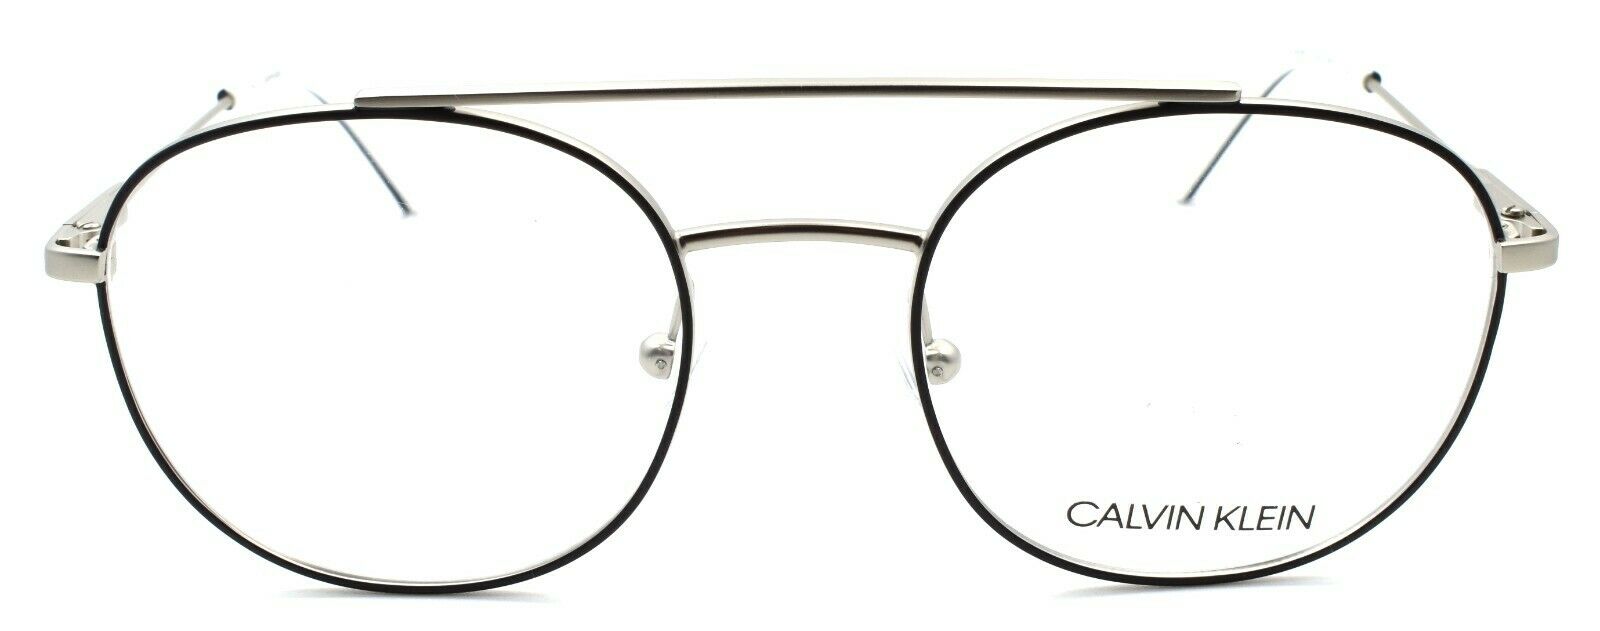 2-Calvin Klein C18123 001 Men's Eyeglasses Frames Aviator 50-19-140 Satin Black-883901104295-IKSpecs